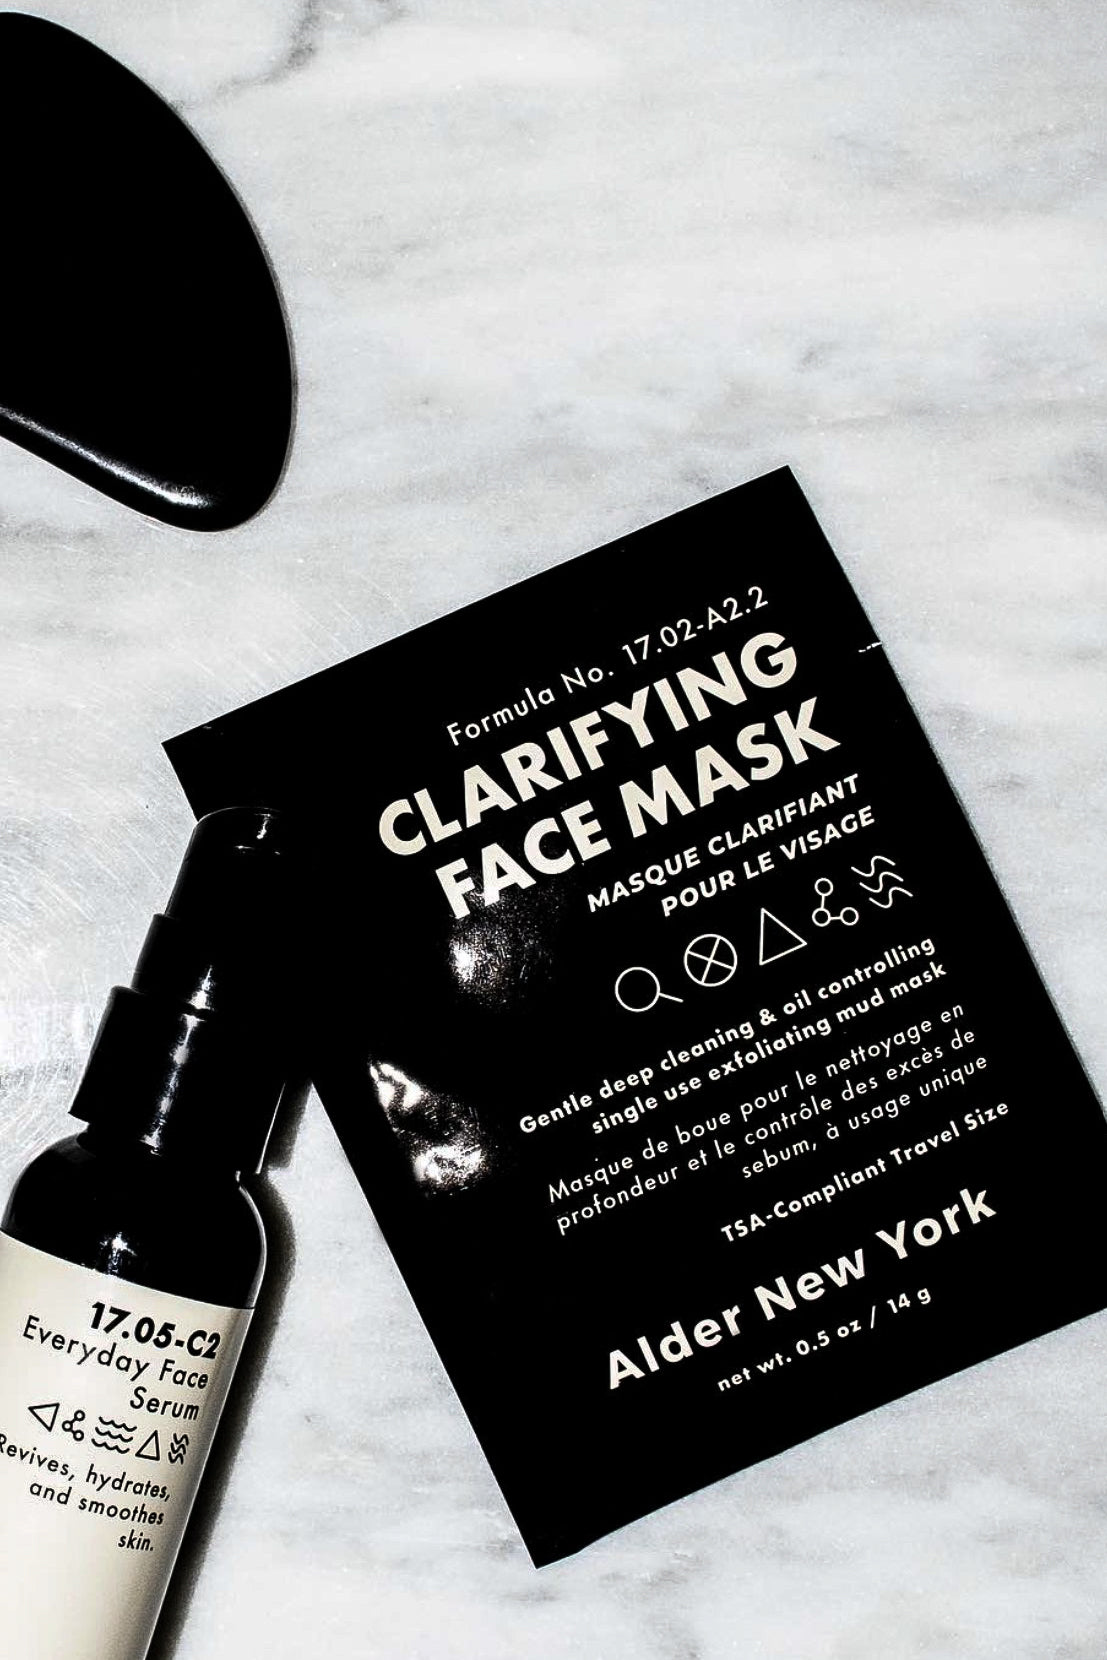 Alder New York Face Mask